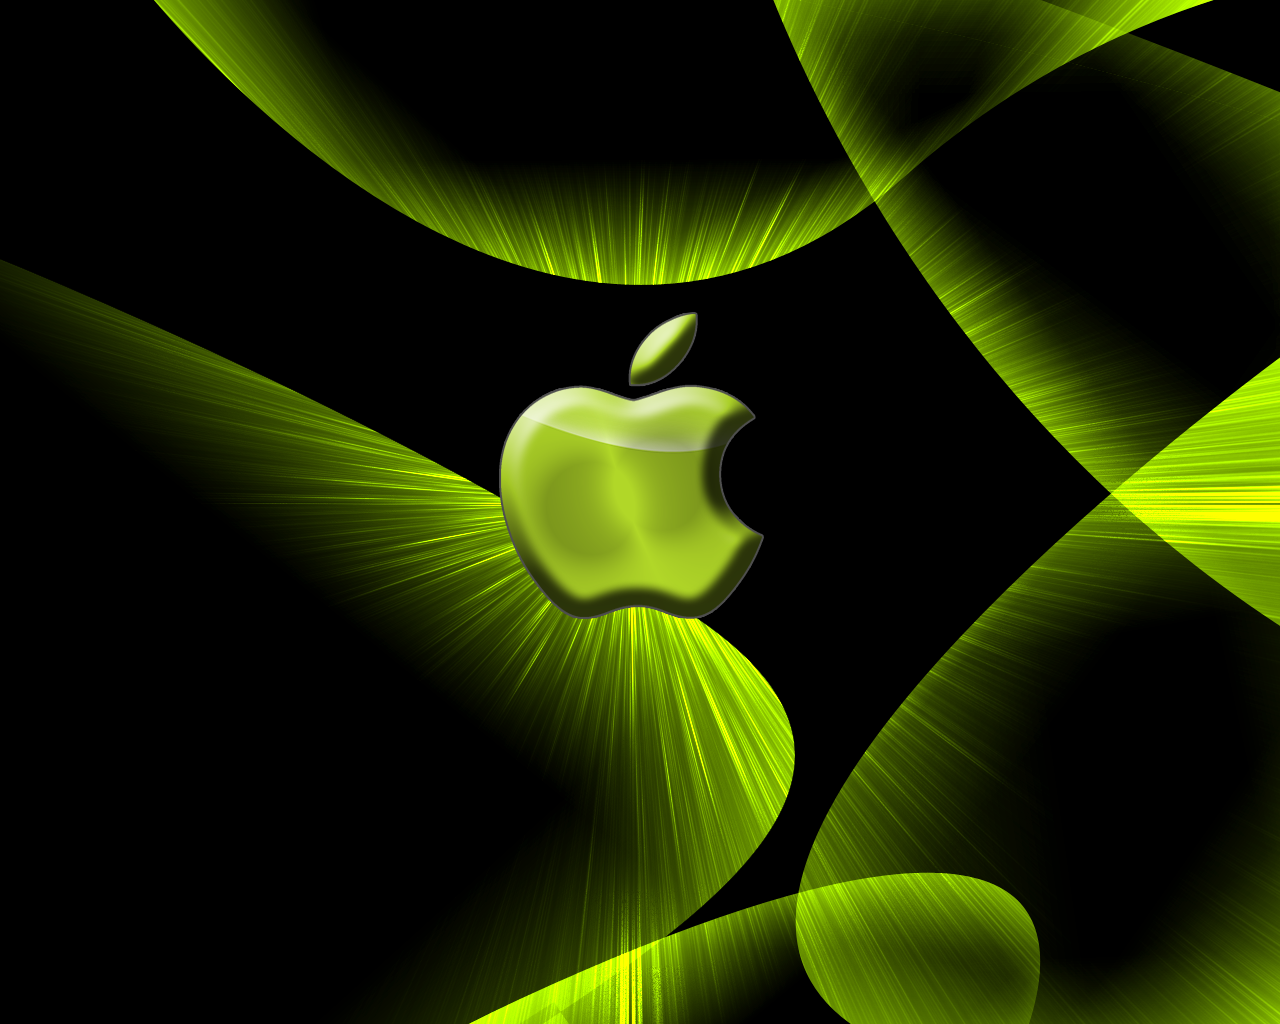 Best Apple ipad Wallpaper Gallery